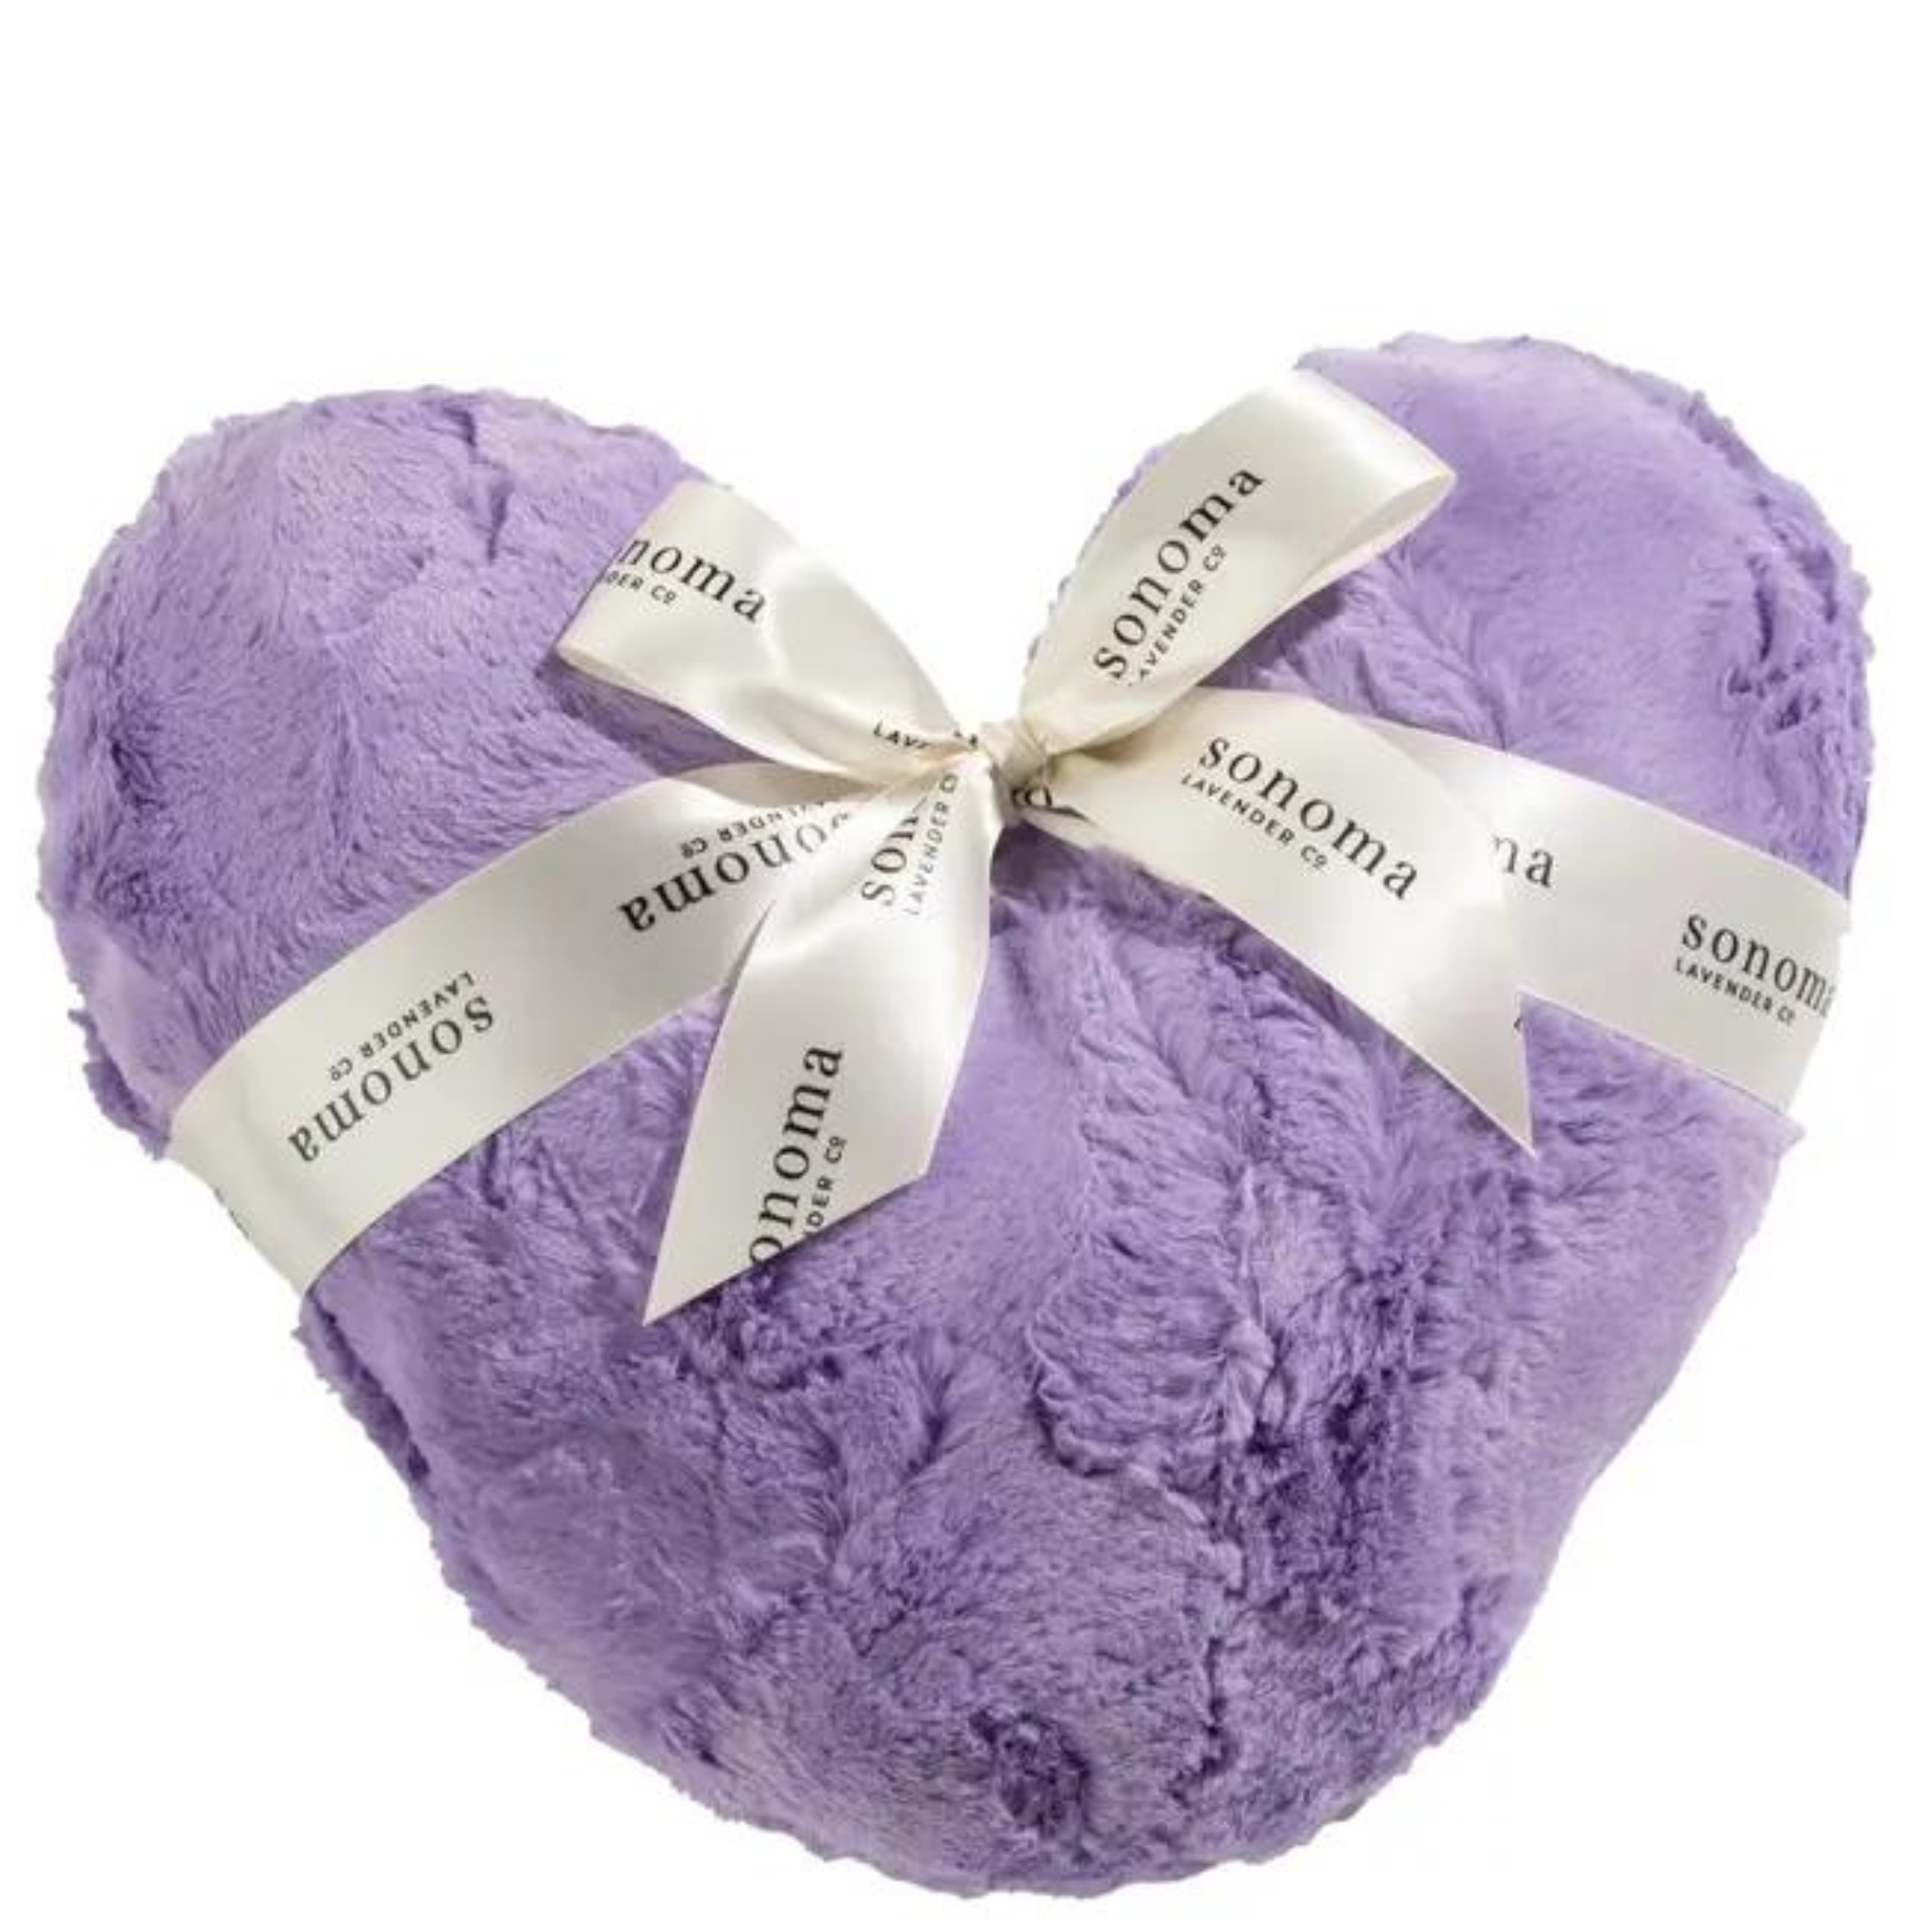 Warming Heart Pillow 12" - Lavender Bellflower